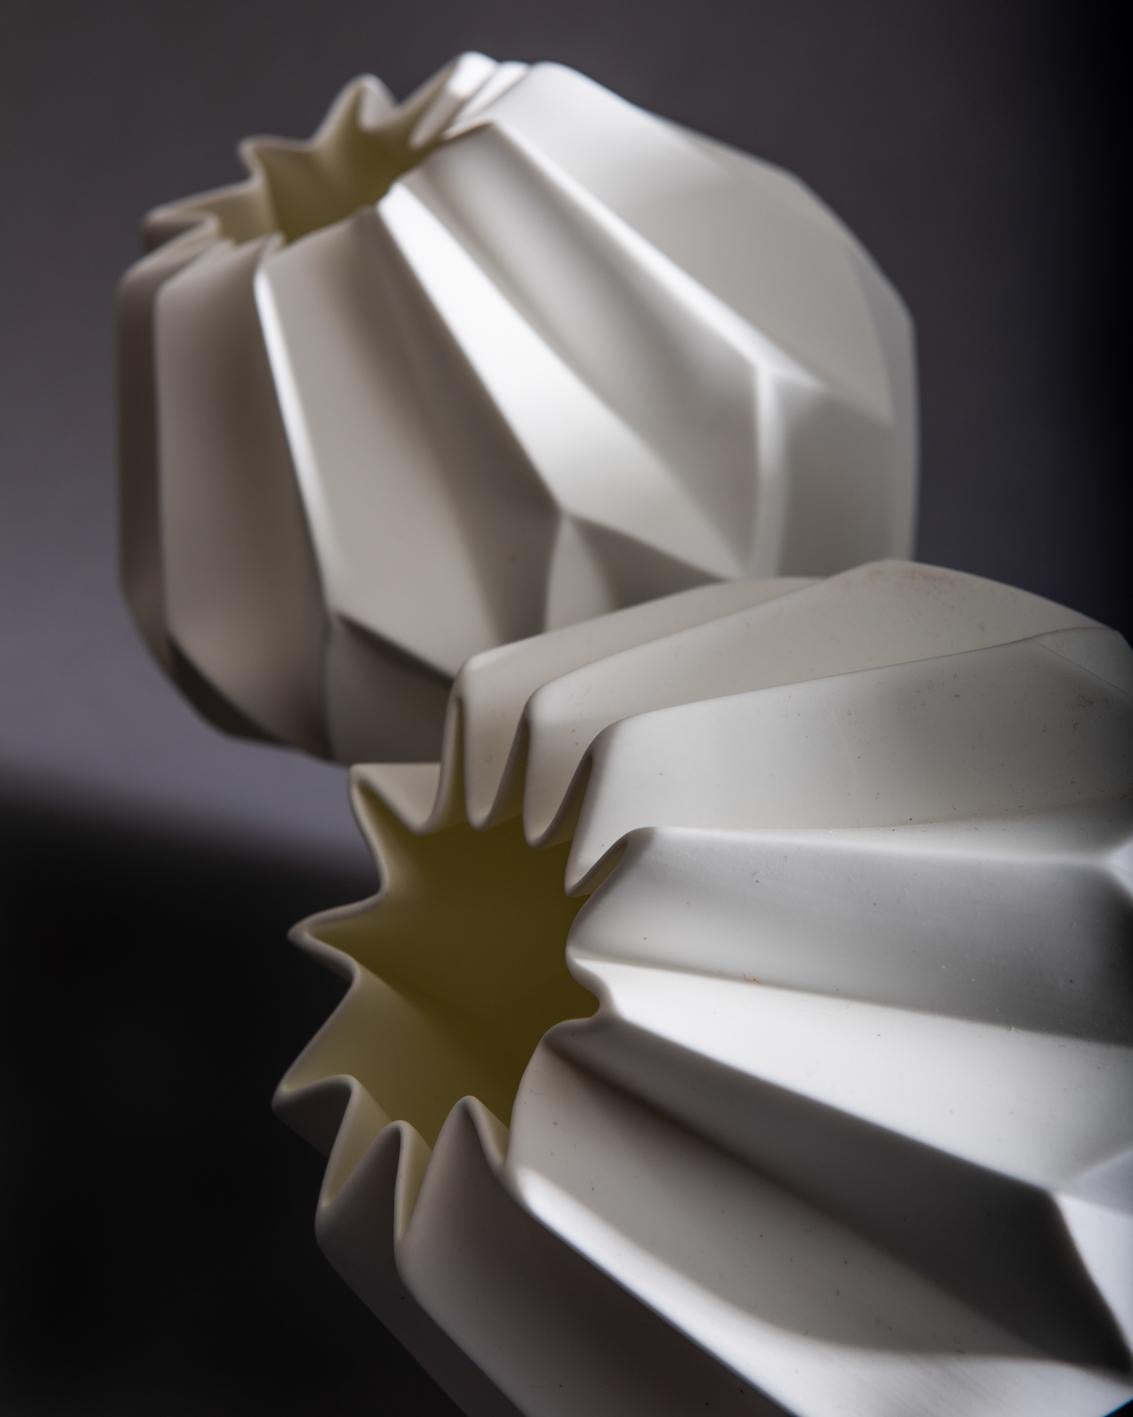 Fired “Slump” Contemporary Origami Ceramic Vase by Studio Morison, No Slump Variation